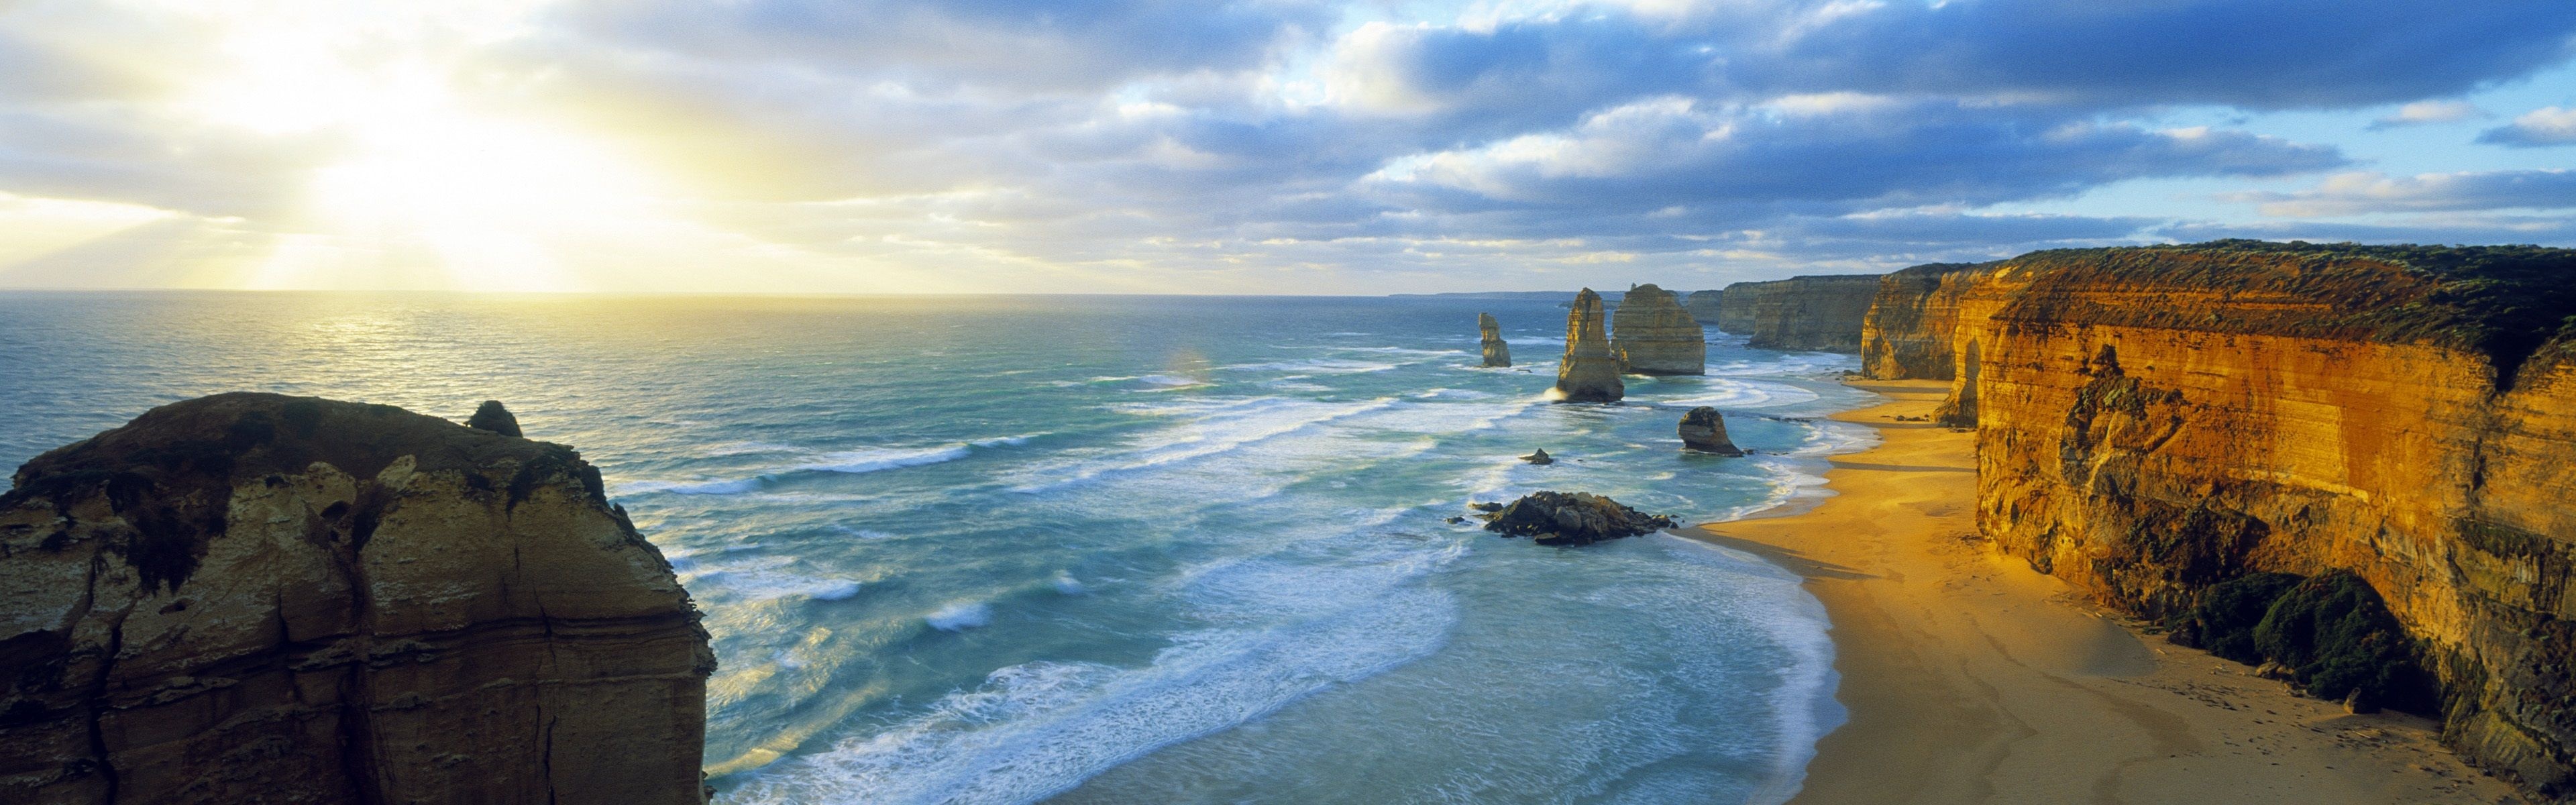 Twelve Apostles, Victoria wallpaper, Beach wallpapers, National park images, 3840x1200 Dual Screen Desktop